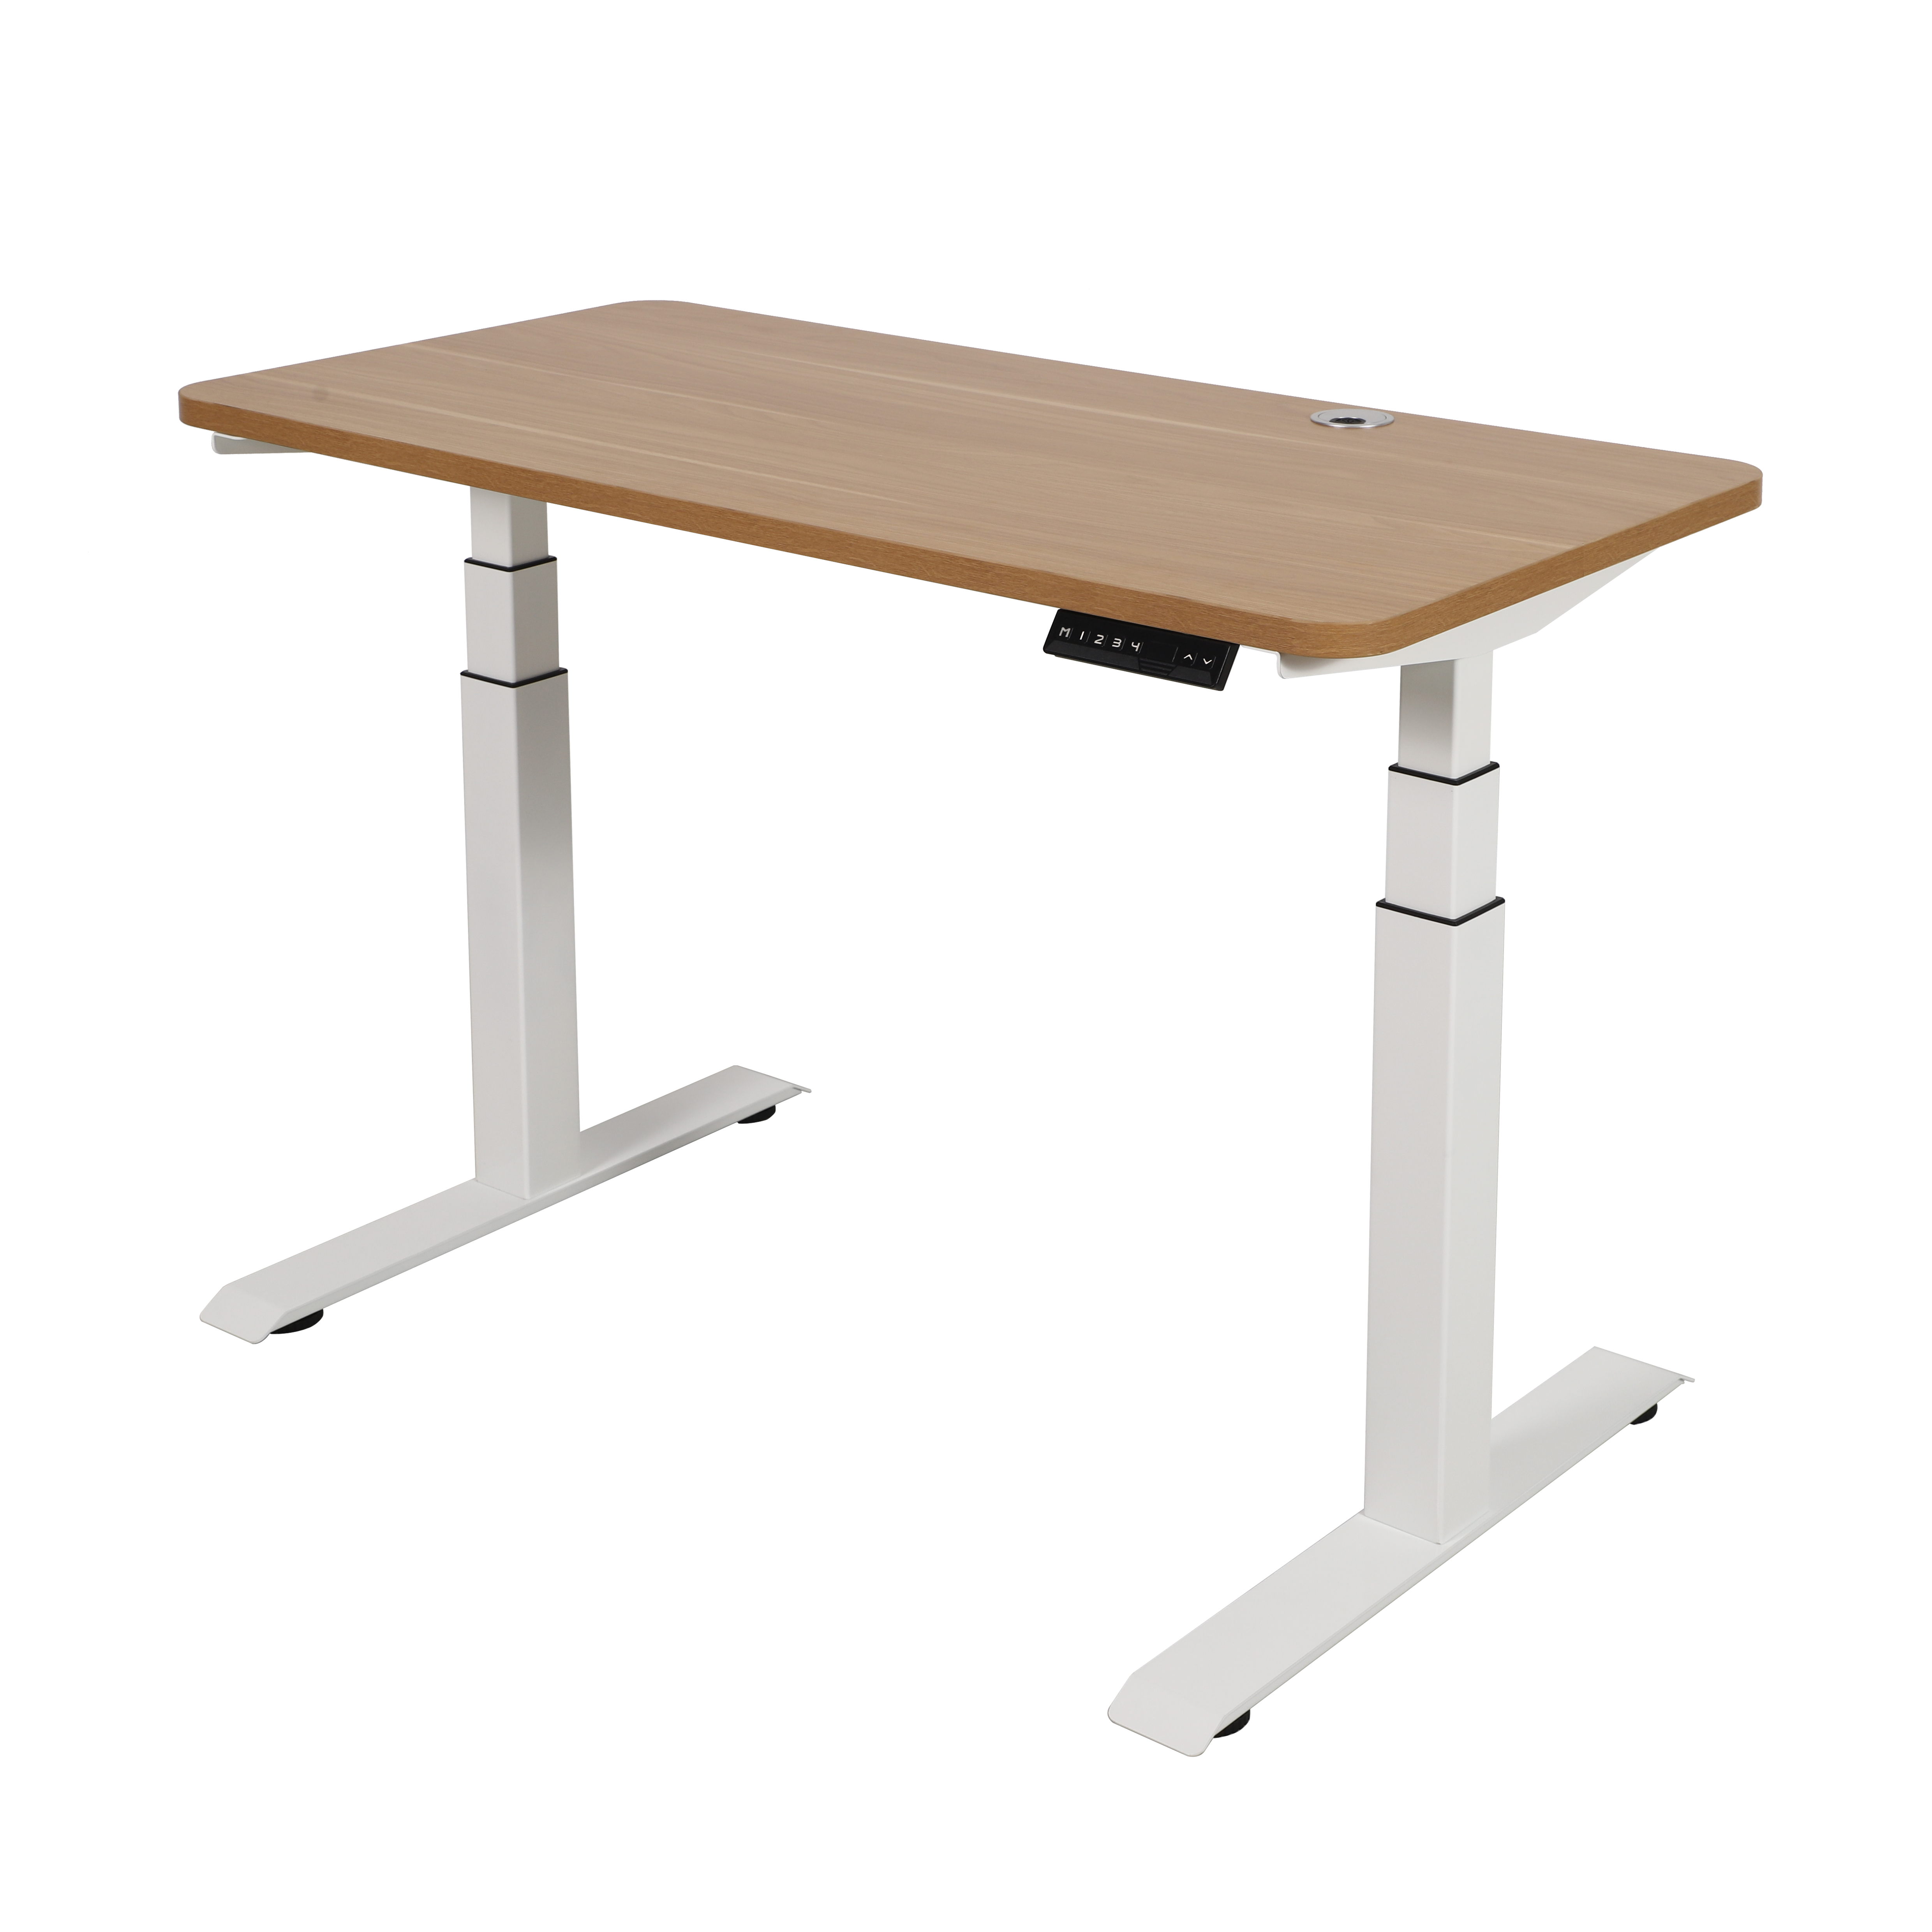 NT33-2B2 Standing electric desk adjustable stand up desk